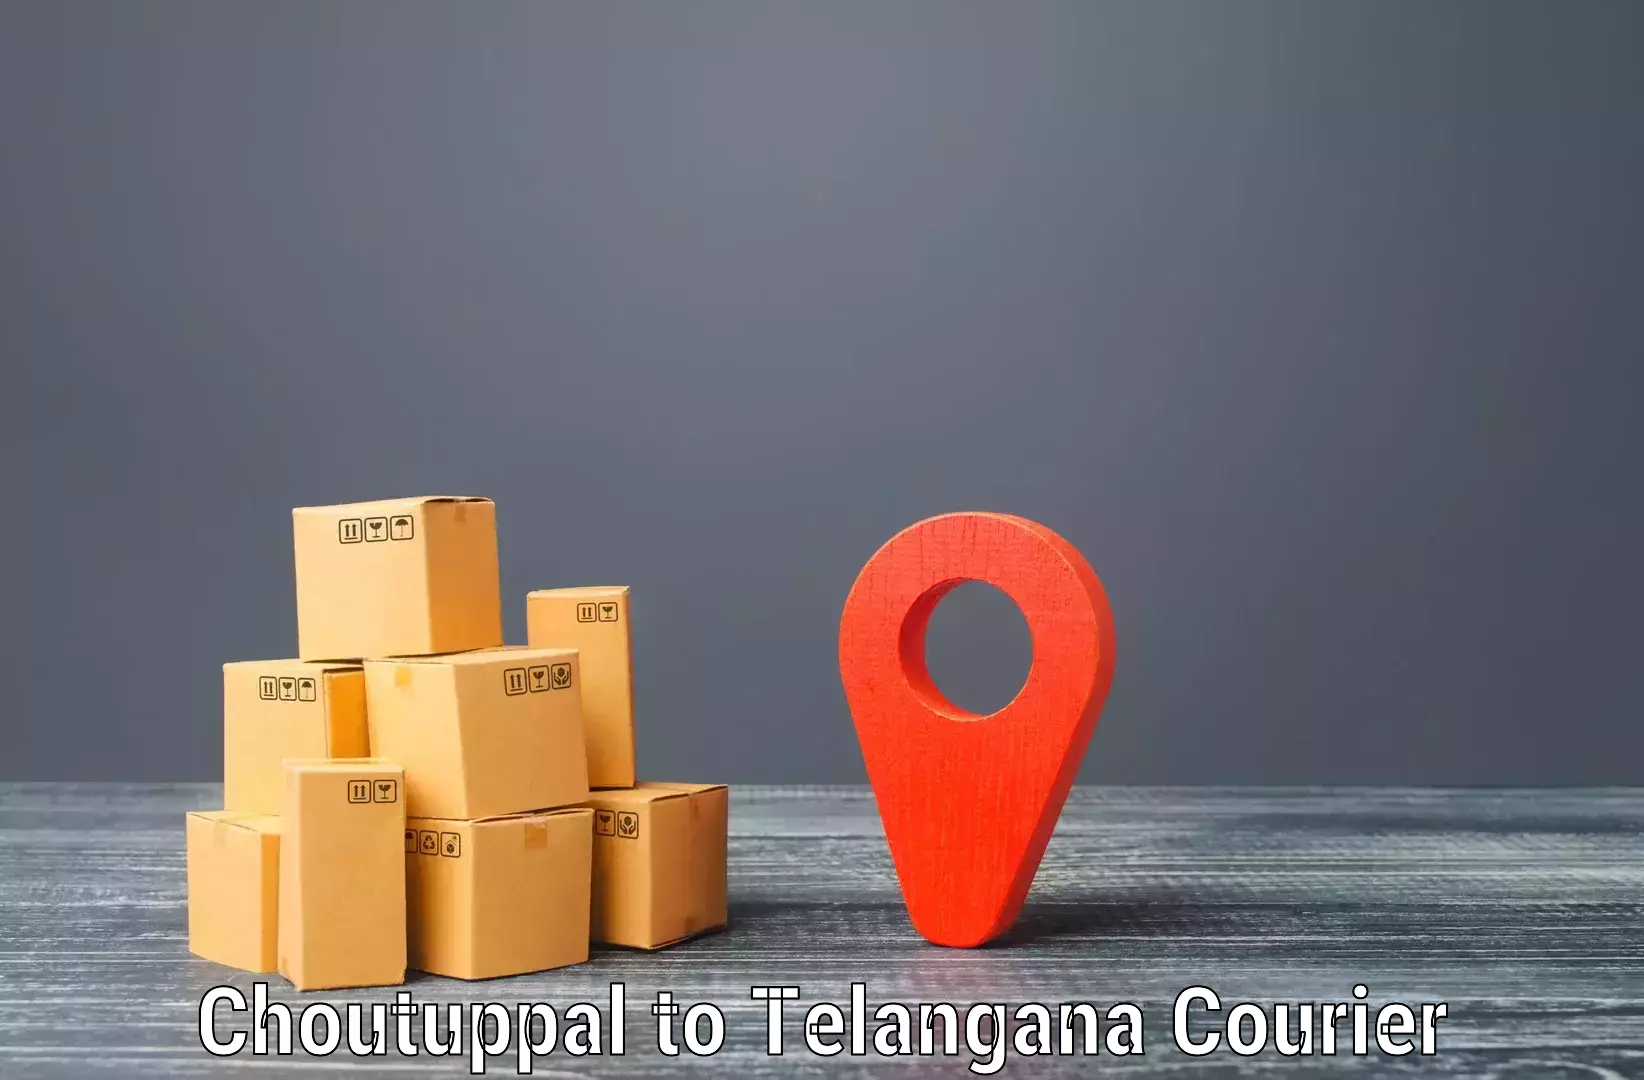 Logistics service provider Choutuppal to Ichoda